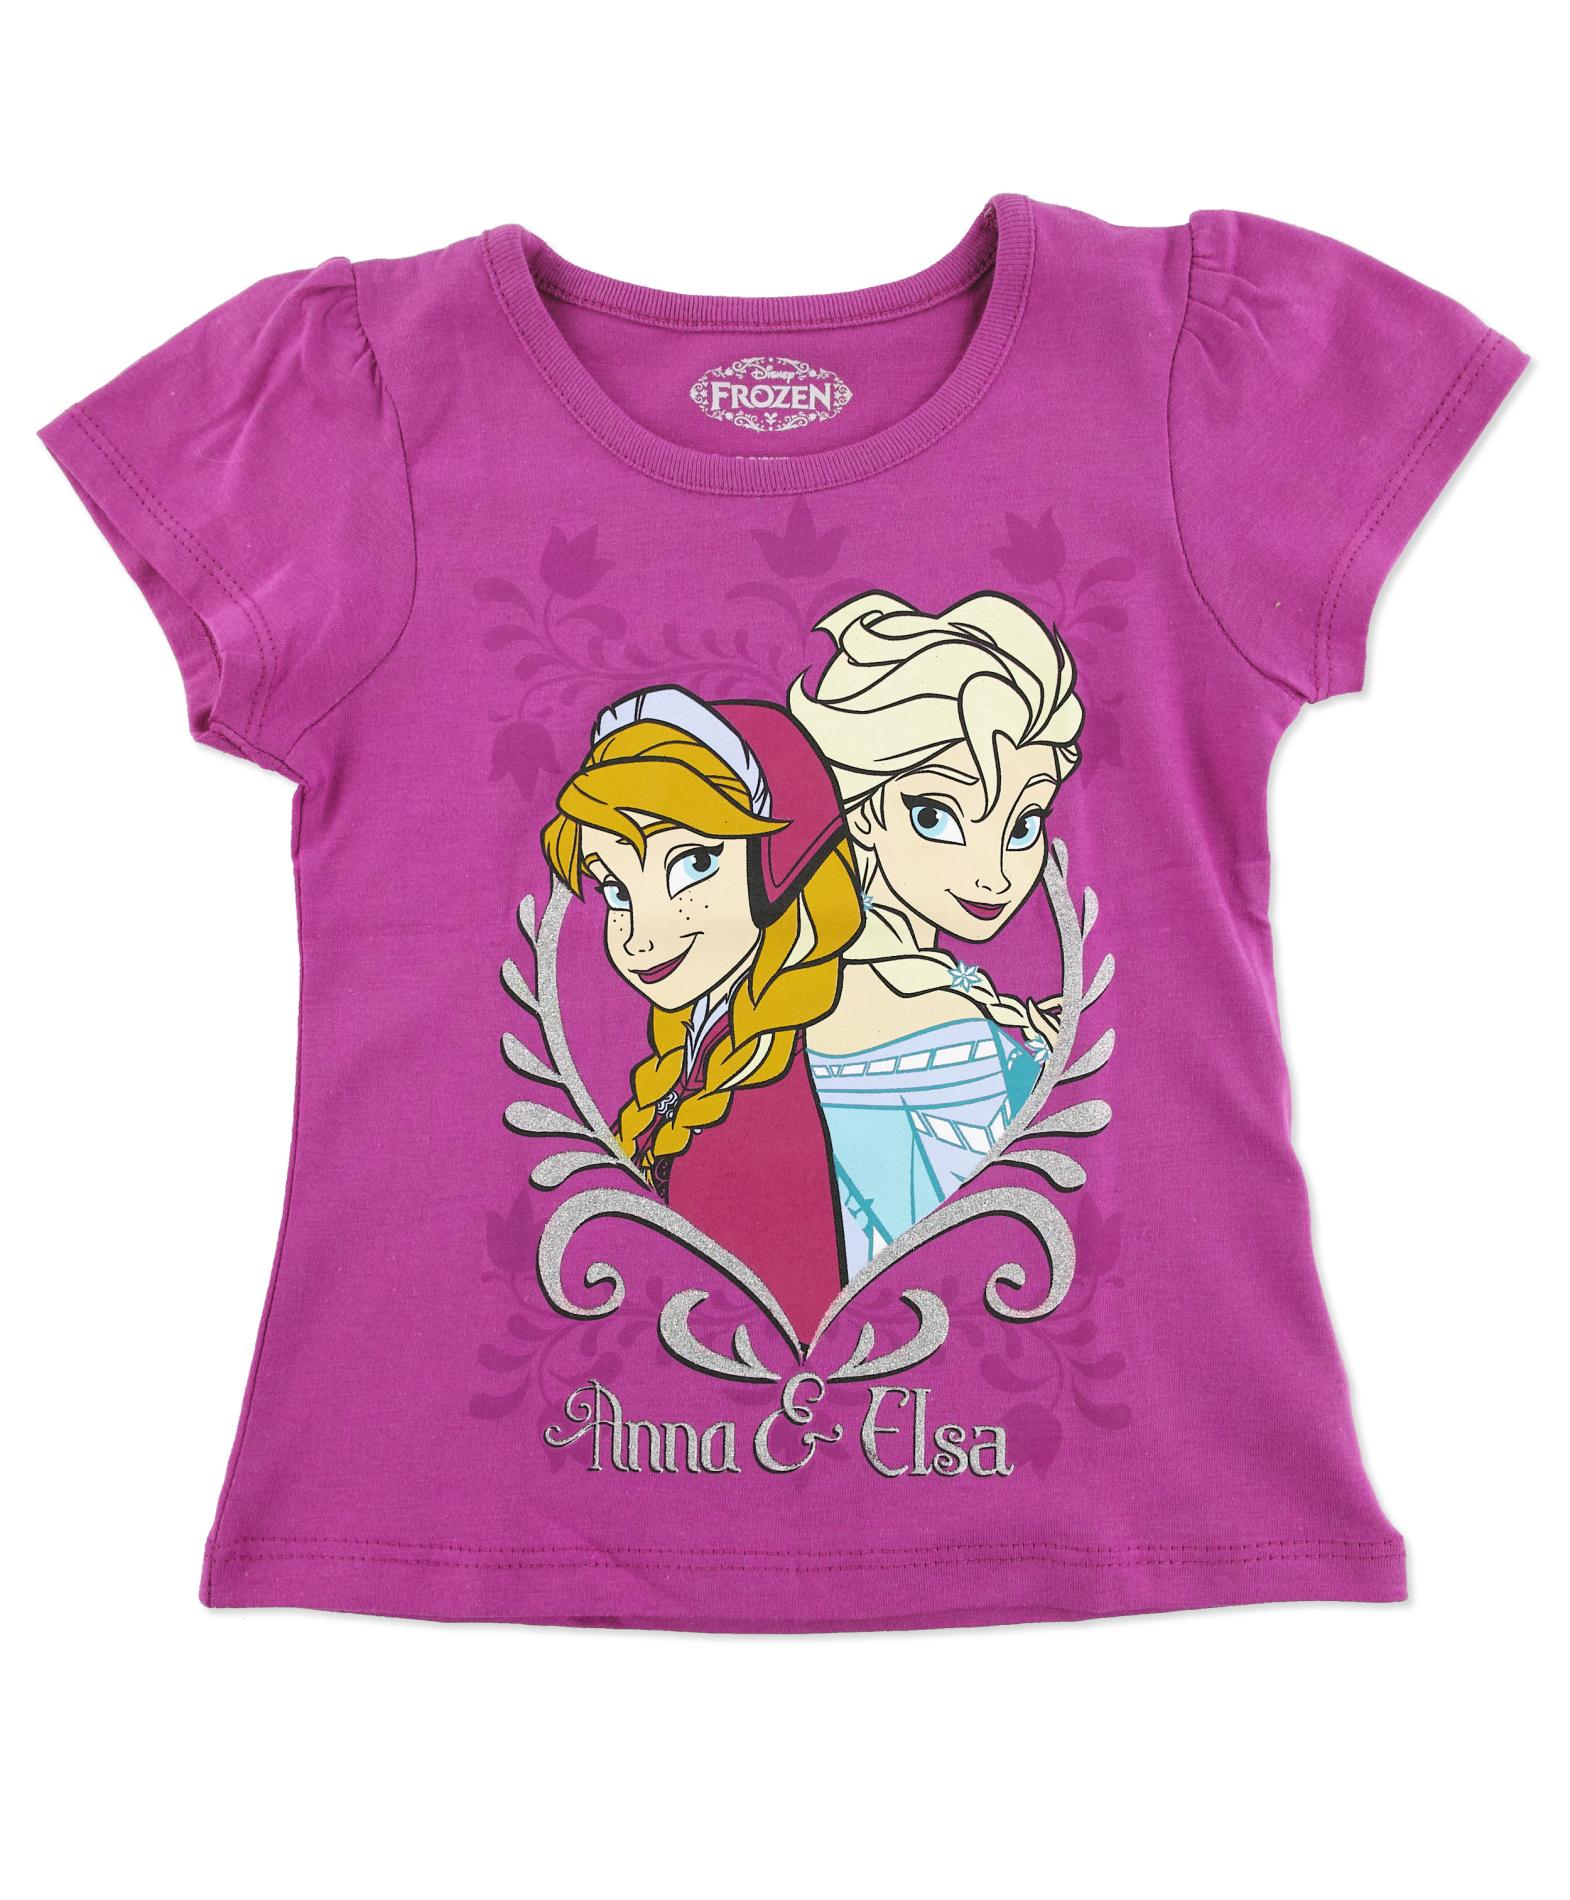 Disney Frozen Toddler Girl's Graphic T-Shirt - Elsa & Anna